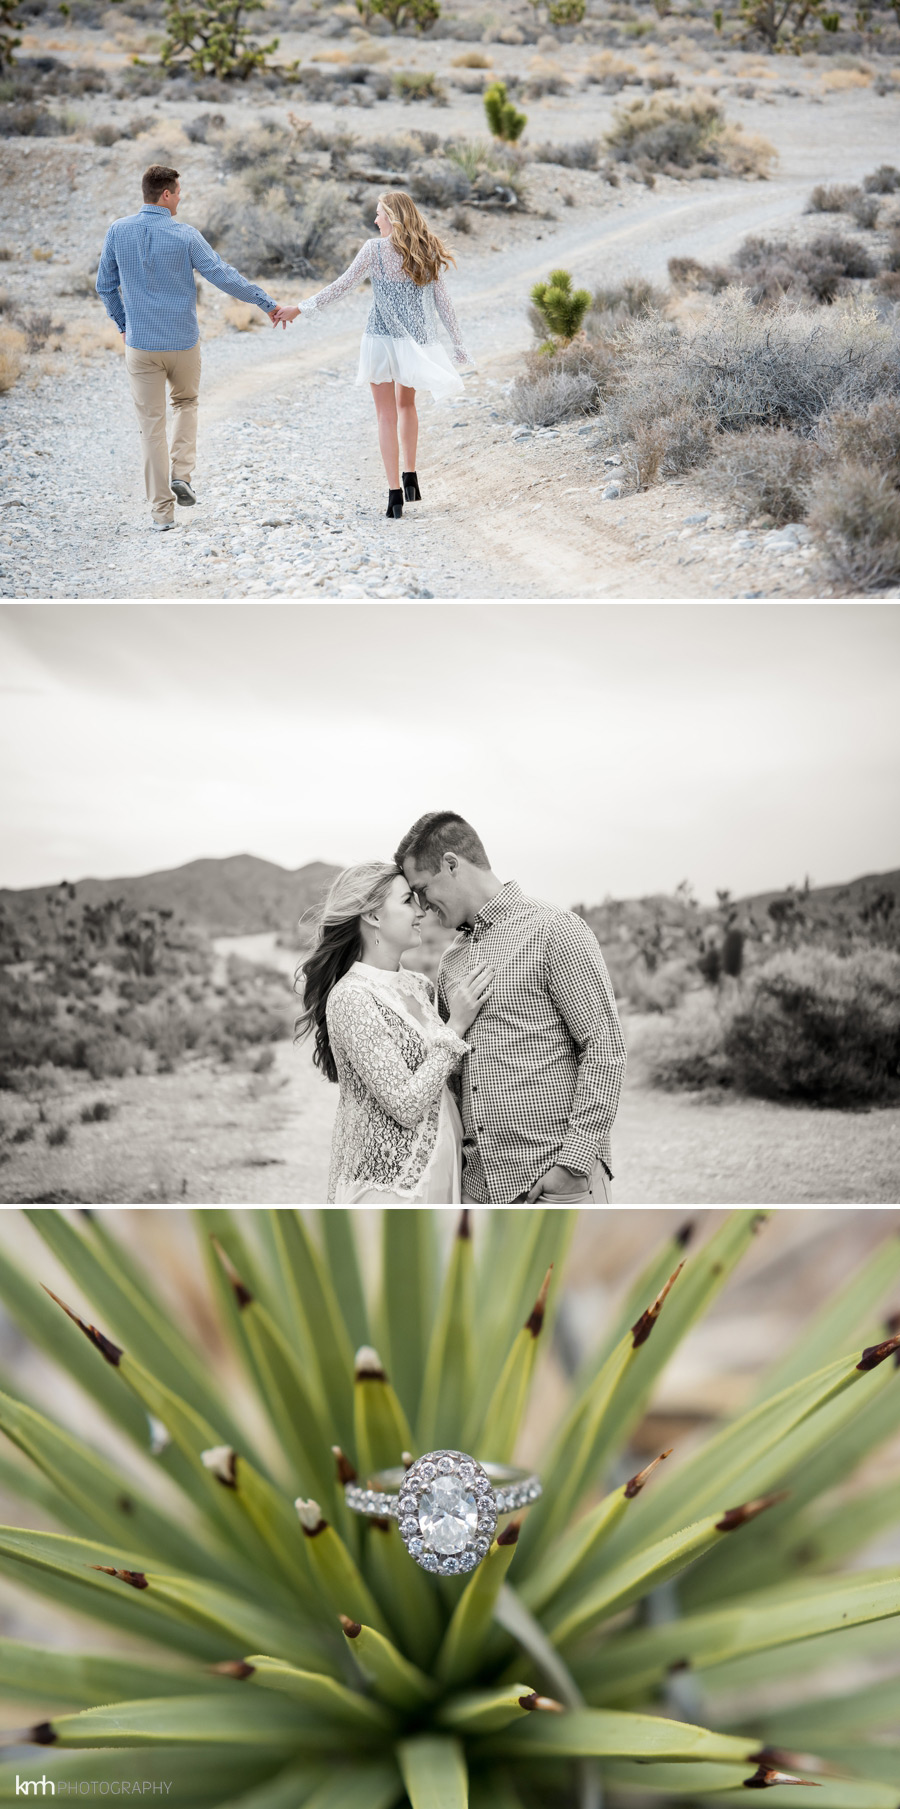 Molly + Paul | Las Vegas Desert Engagement Photos | KMH Photography